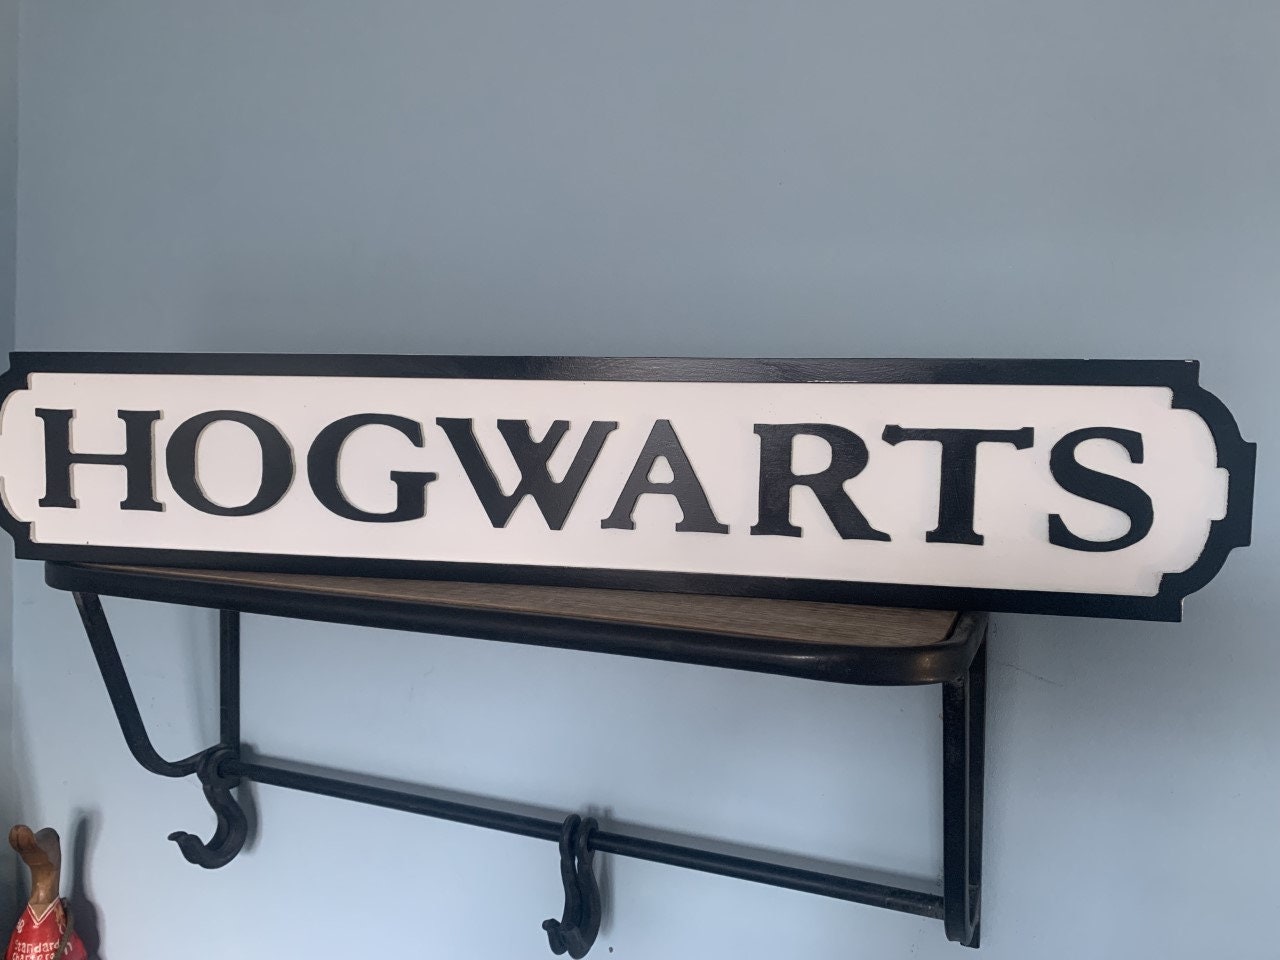 HOGWARTS Harry Potter Retro Vintage Wooden Mini Road Street Sign Free Delivery